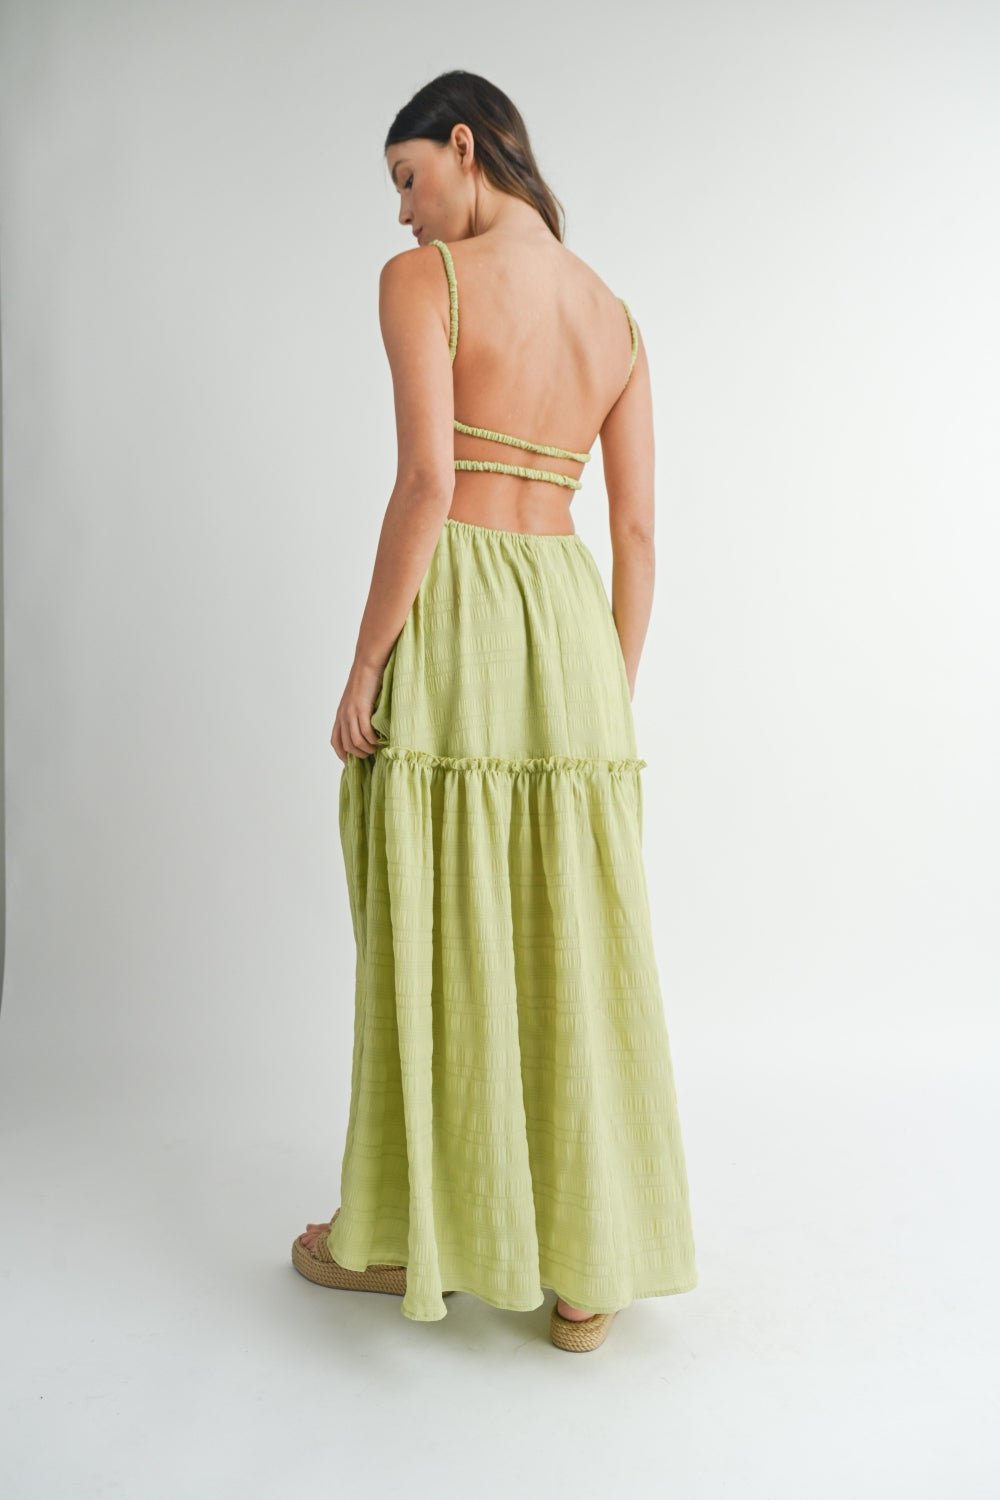 Sleeveless Backless Maxi Dress in SageMaxi DressMable